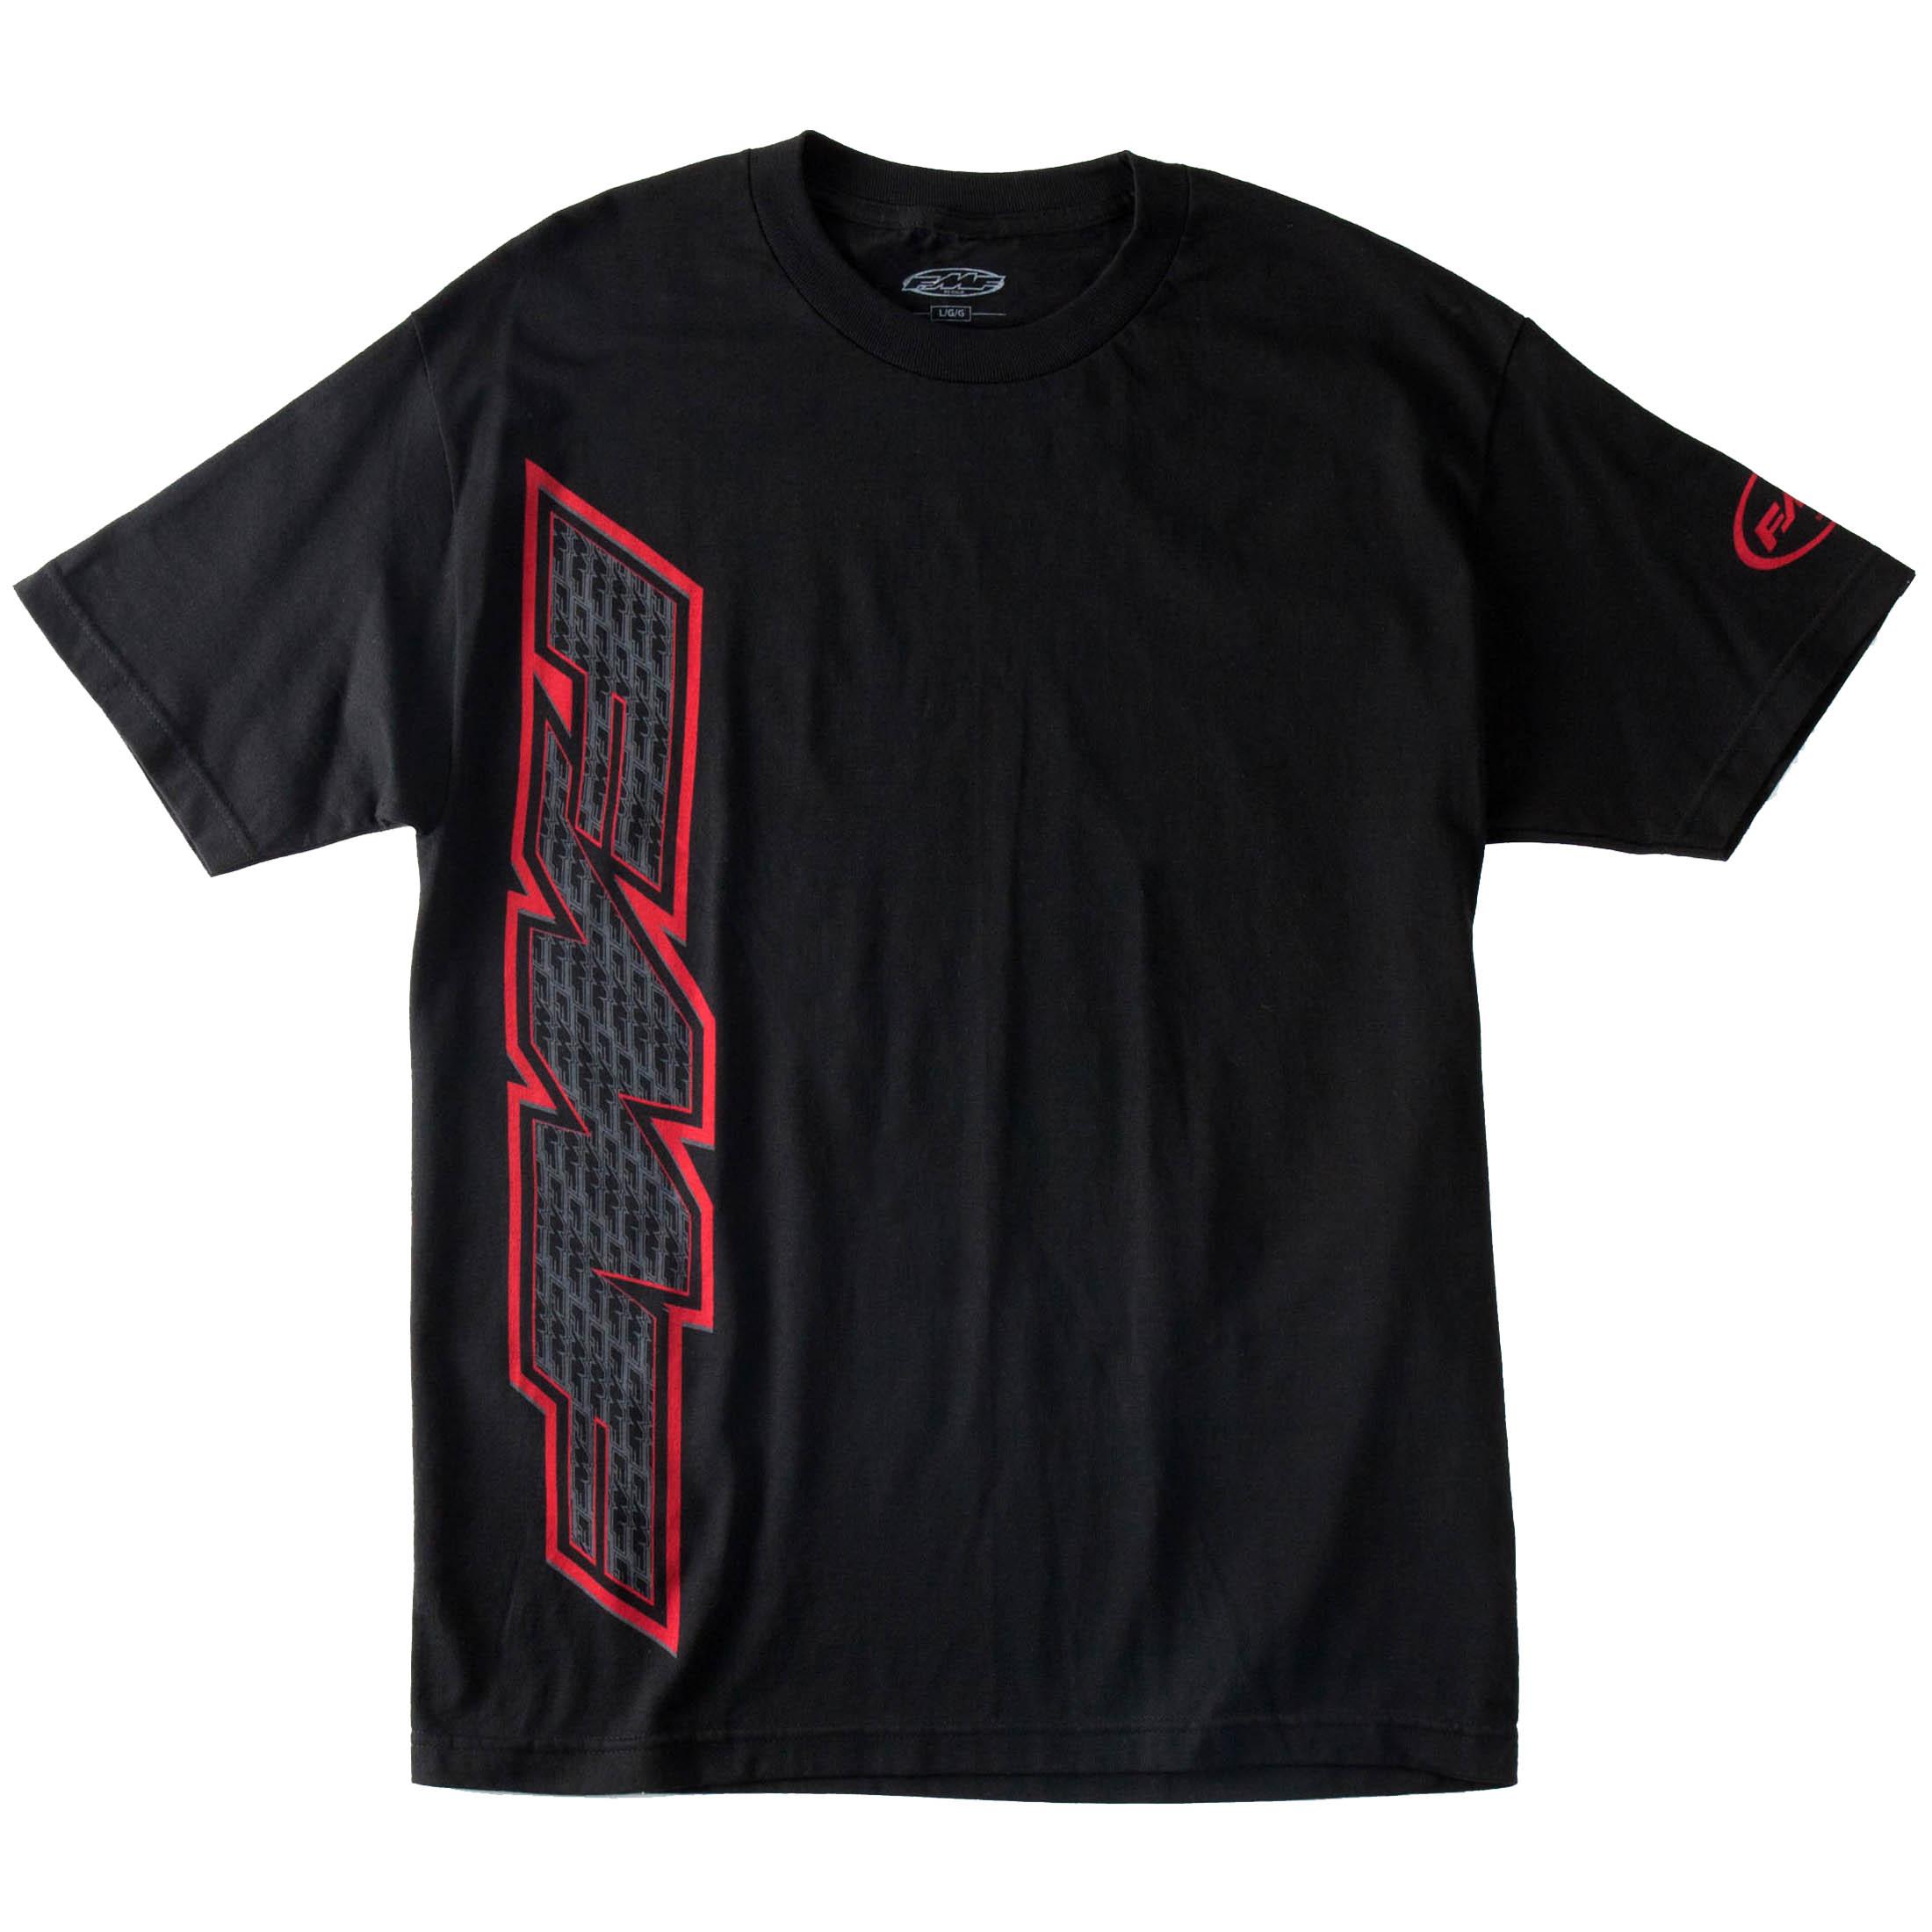 Fmf apparel draino t-shirt motorcycle shirts